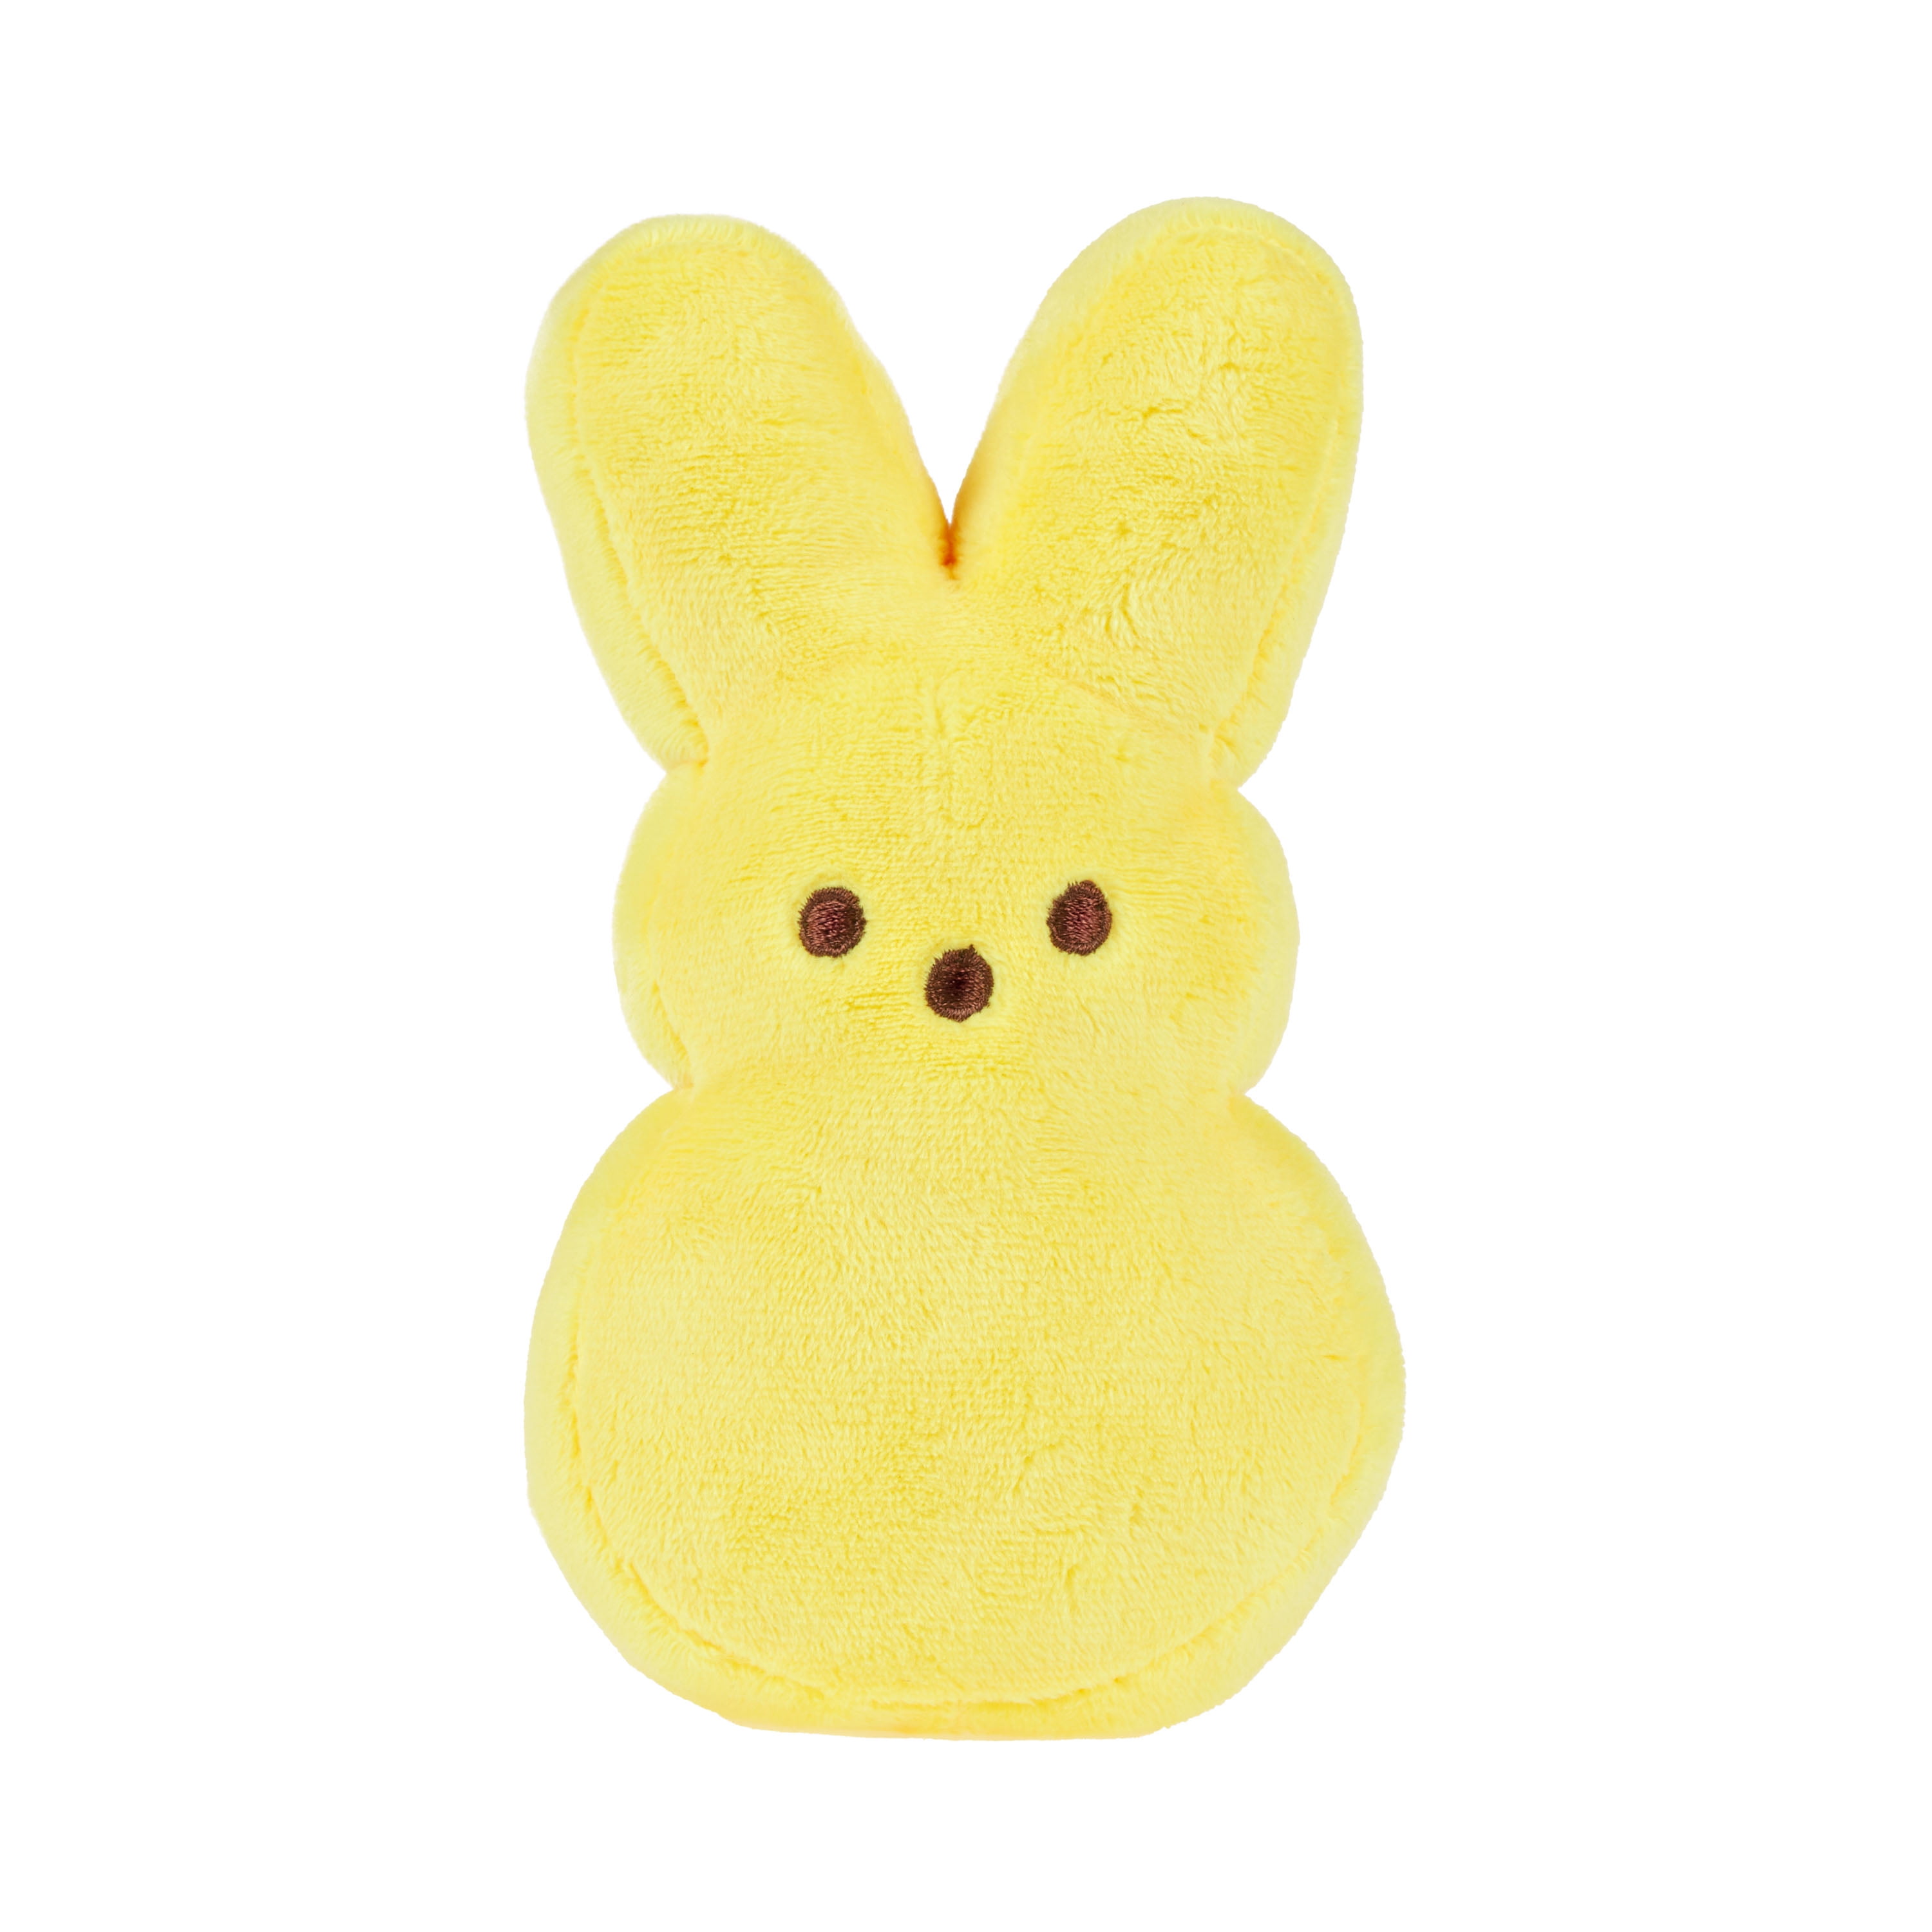 6" plush bean bag yellow  Peeps Bunny 